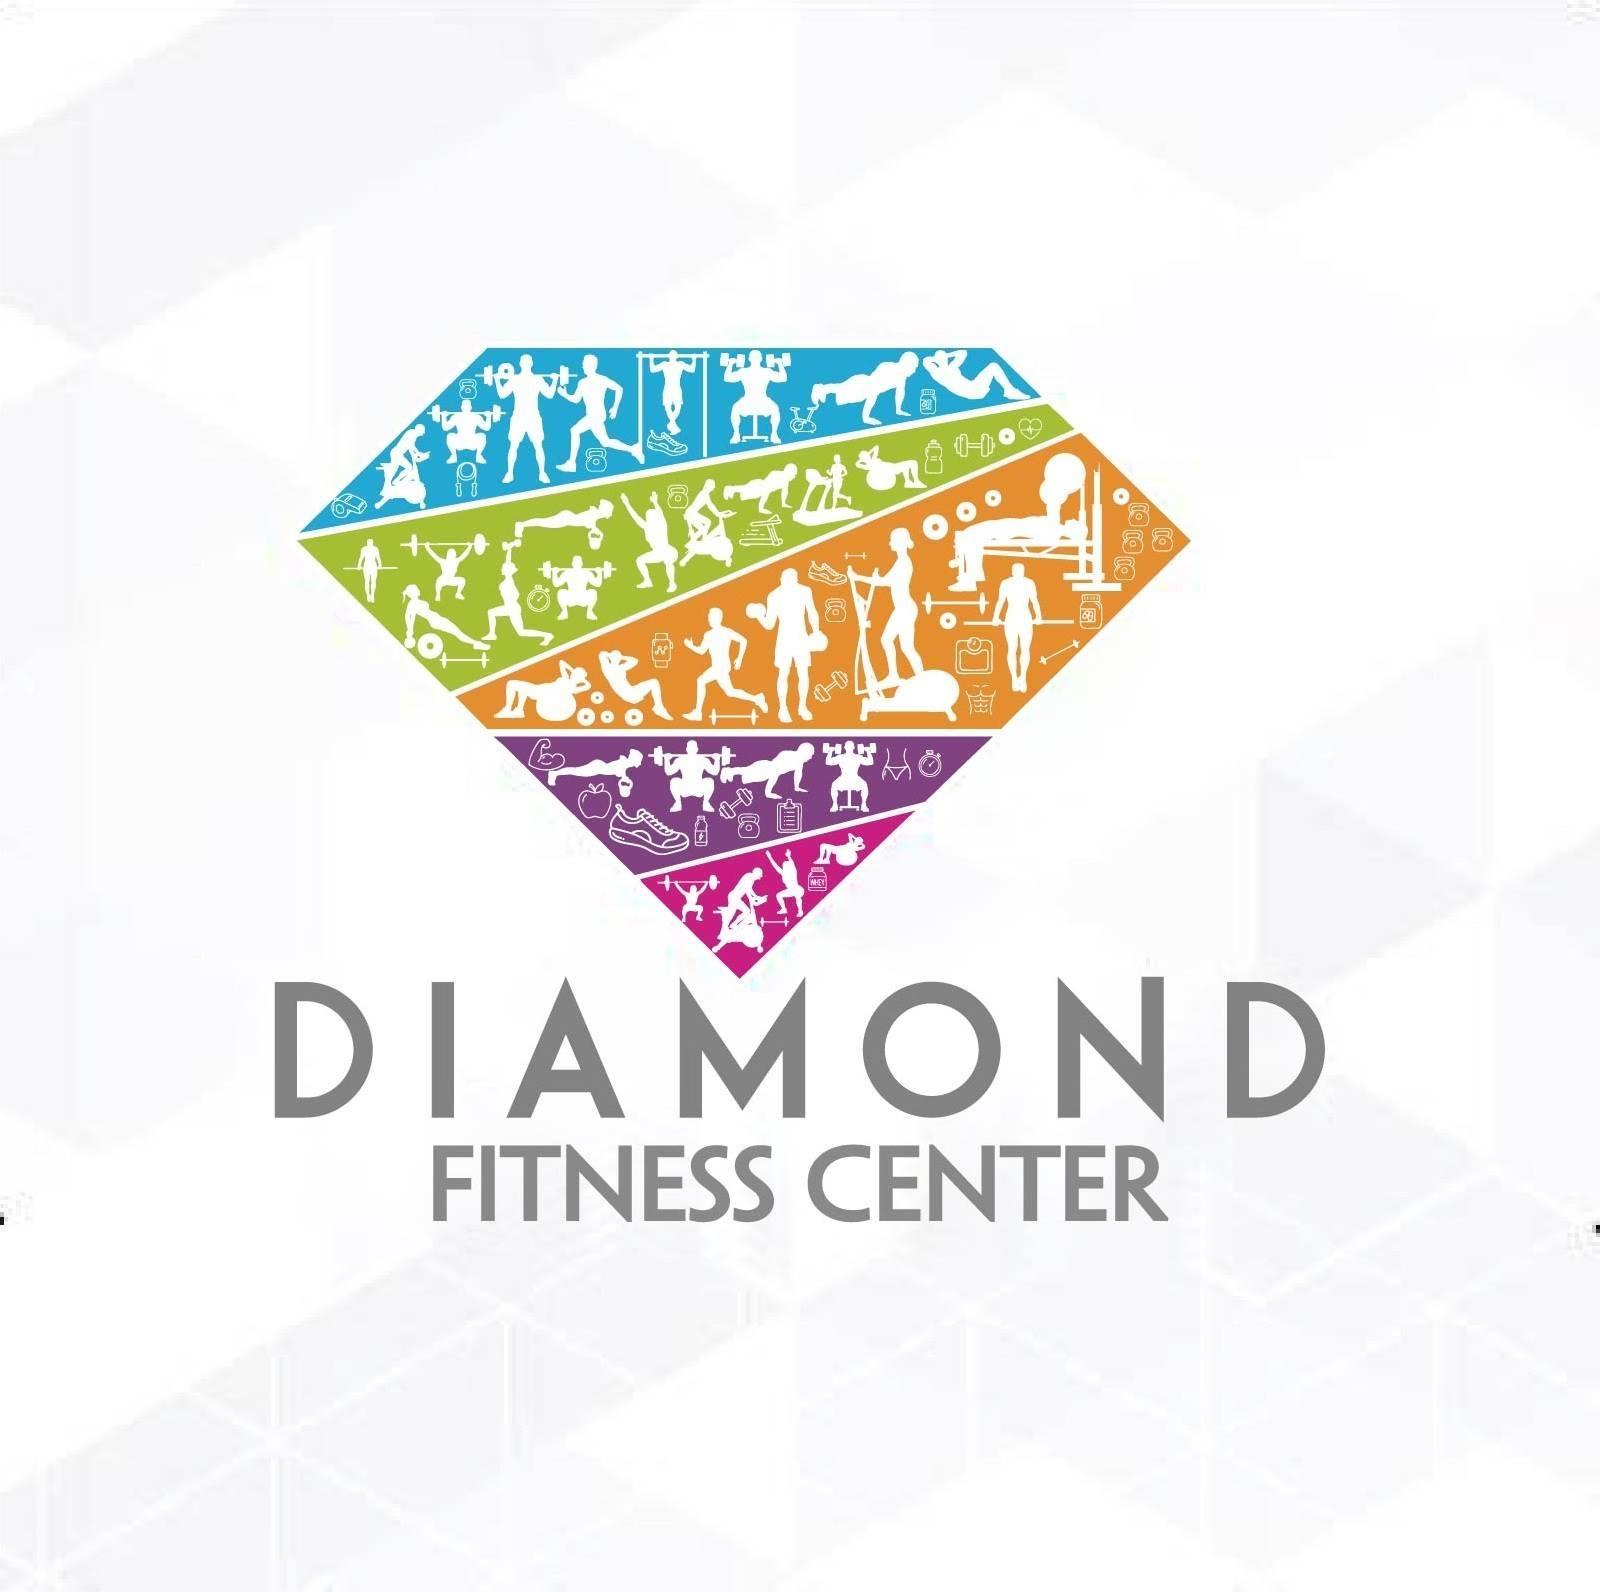 Diamond Fitness Center